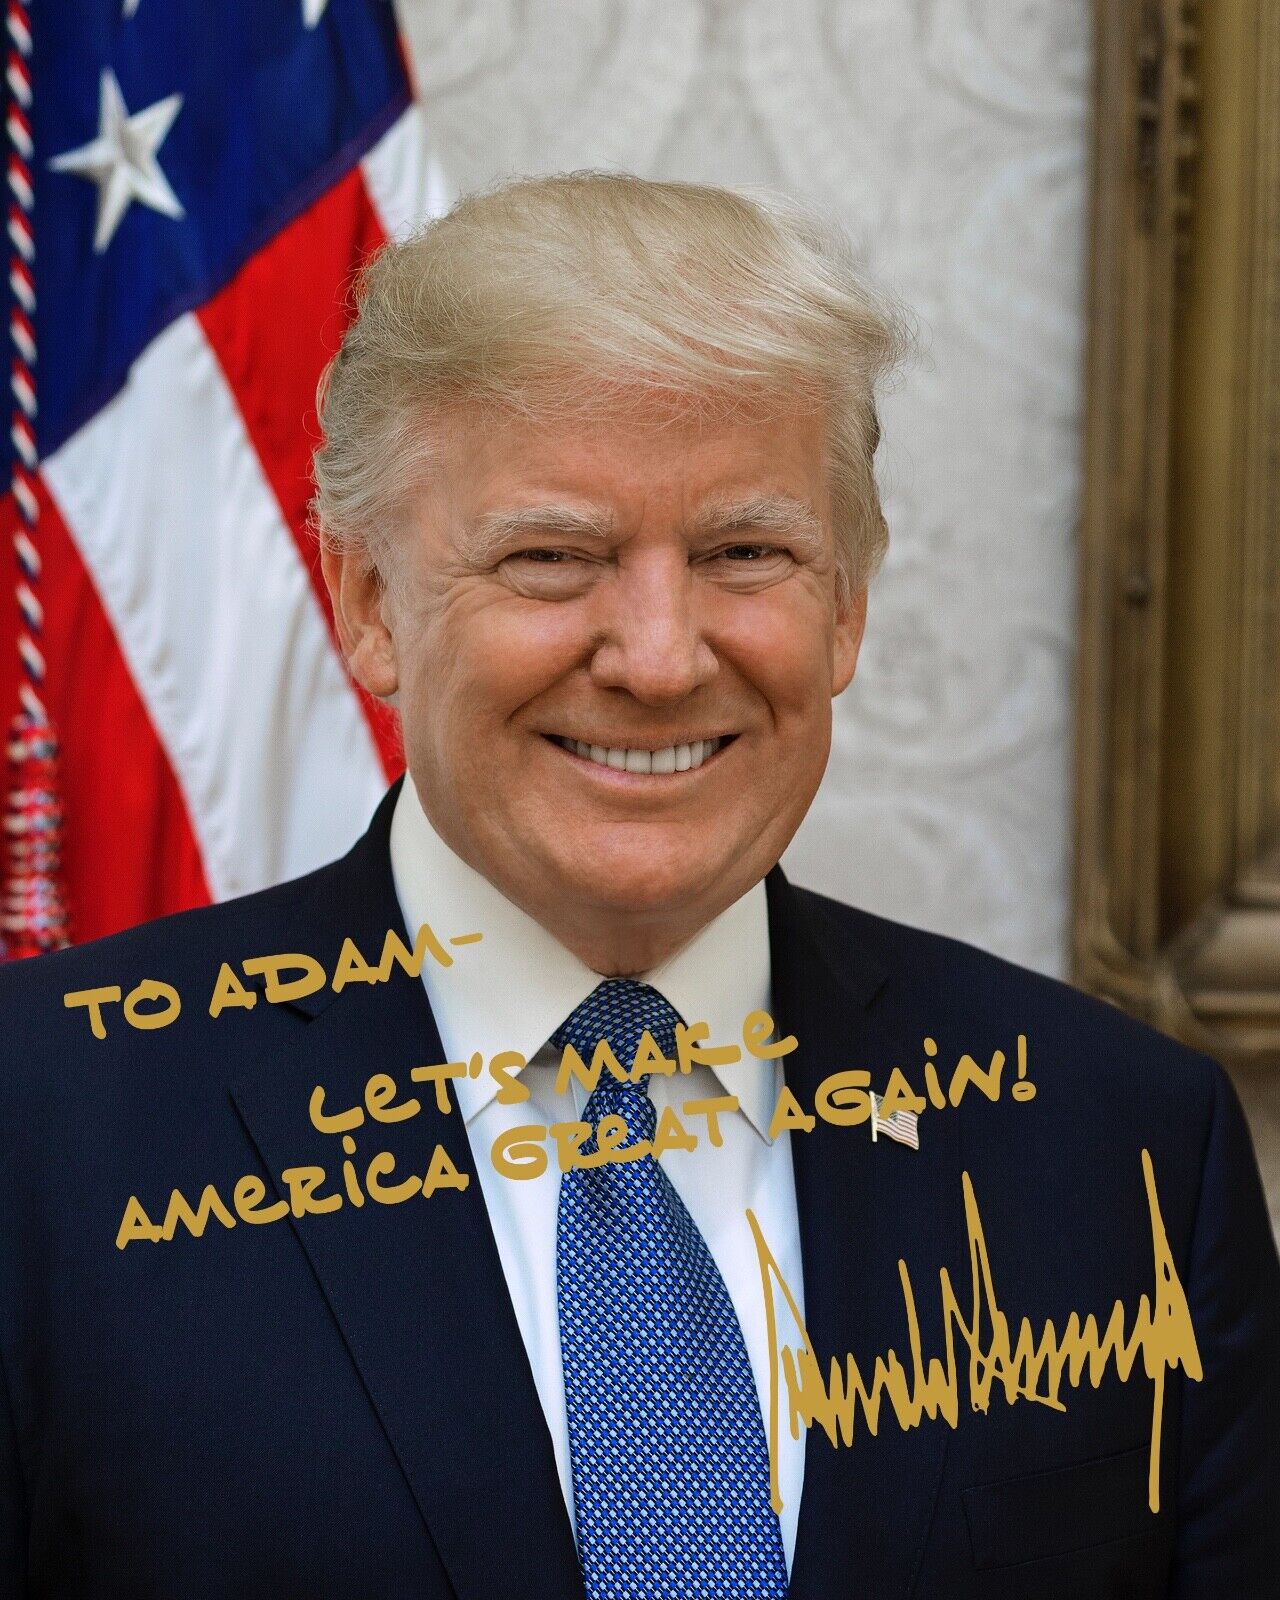 Personalized President Donald J. Trump Autographed 8x10 Photo w/ Custom Message